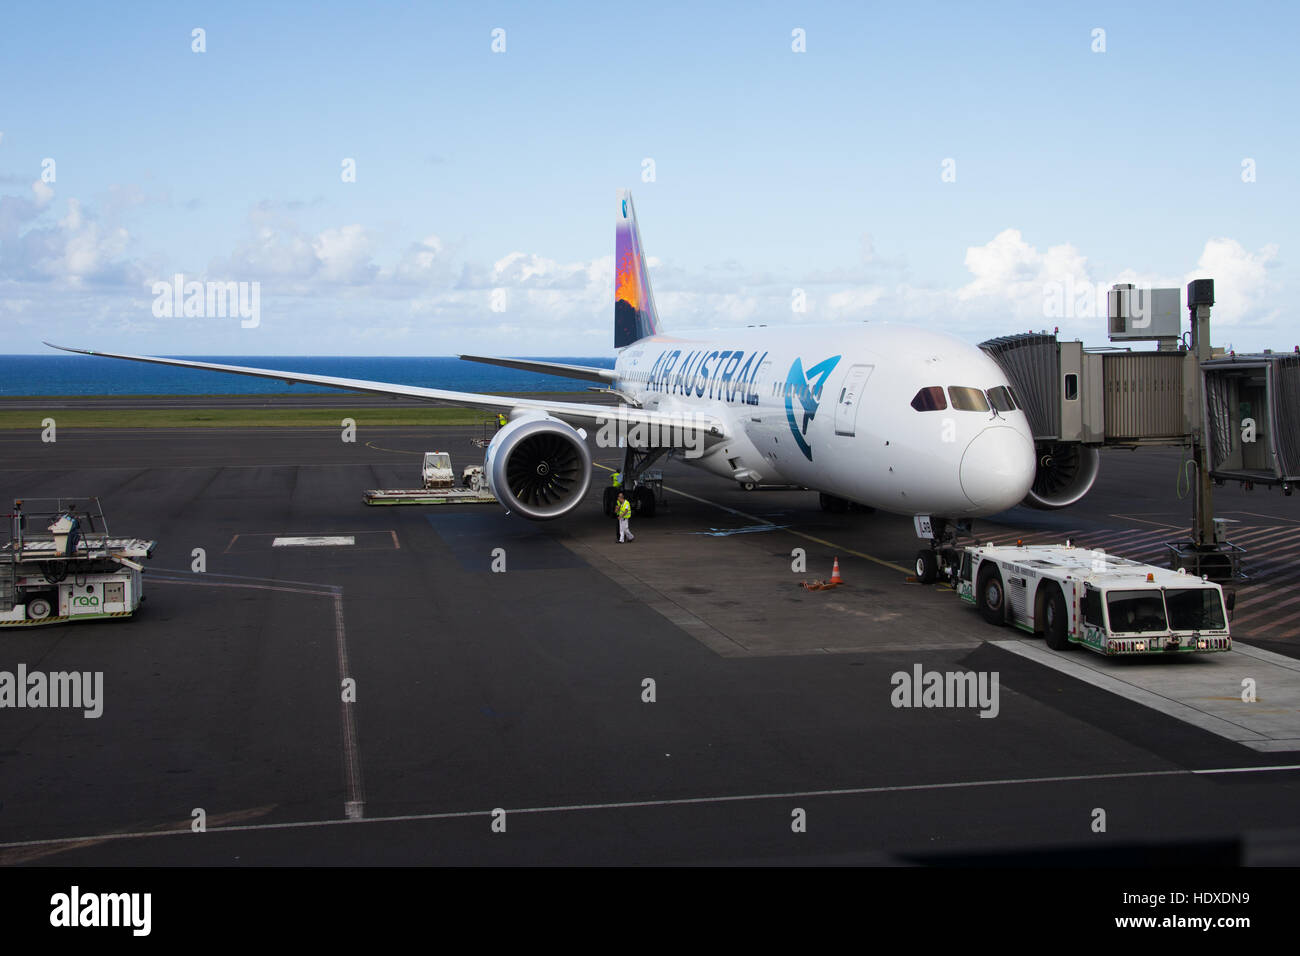 Air Austral plane at a gate at Ronald Garros Airport, Reunion Island Stock Photo